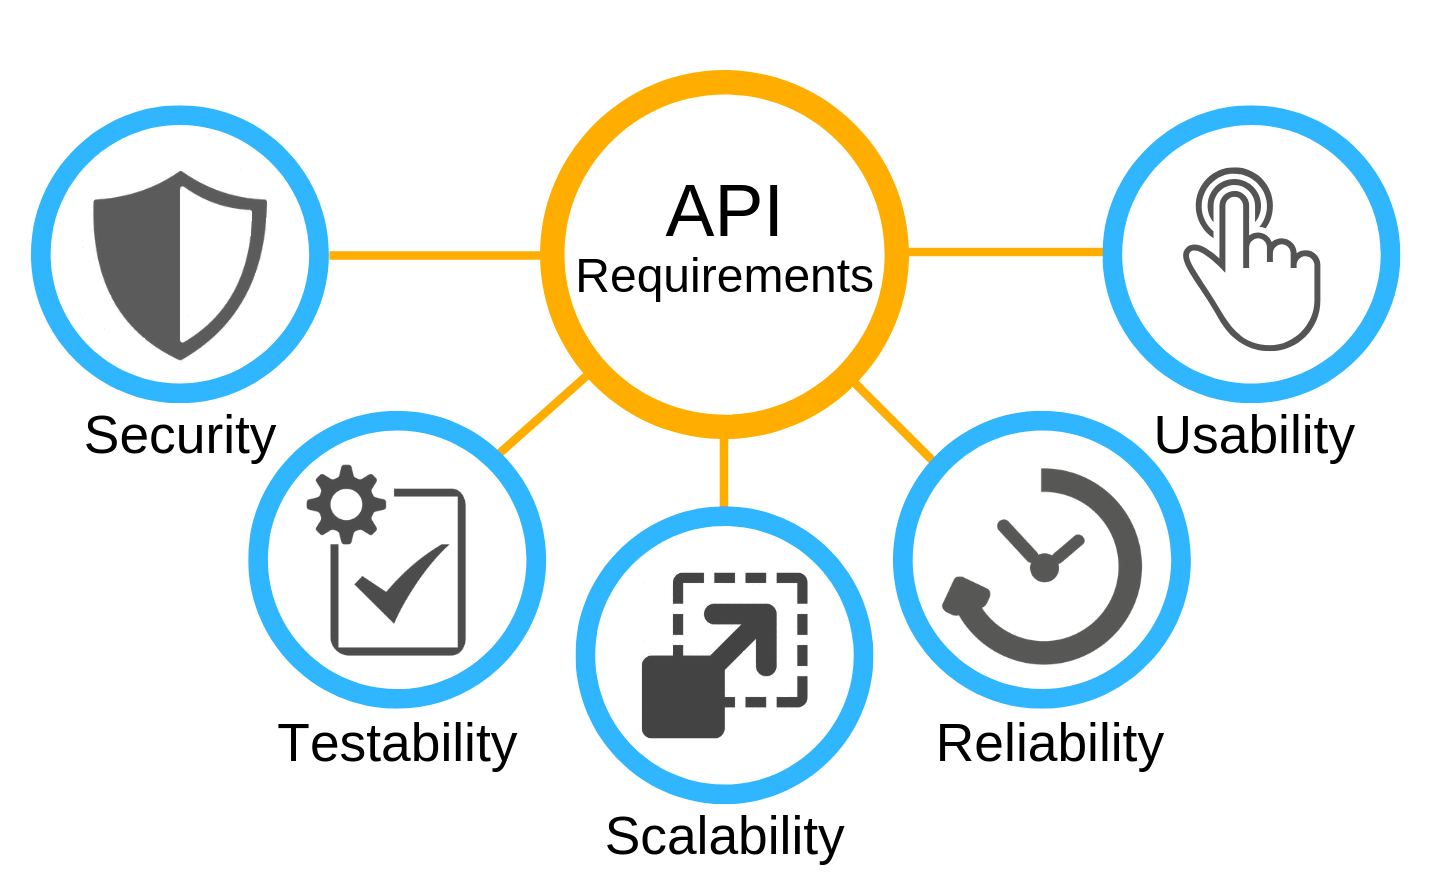 API requirements